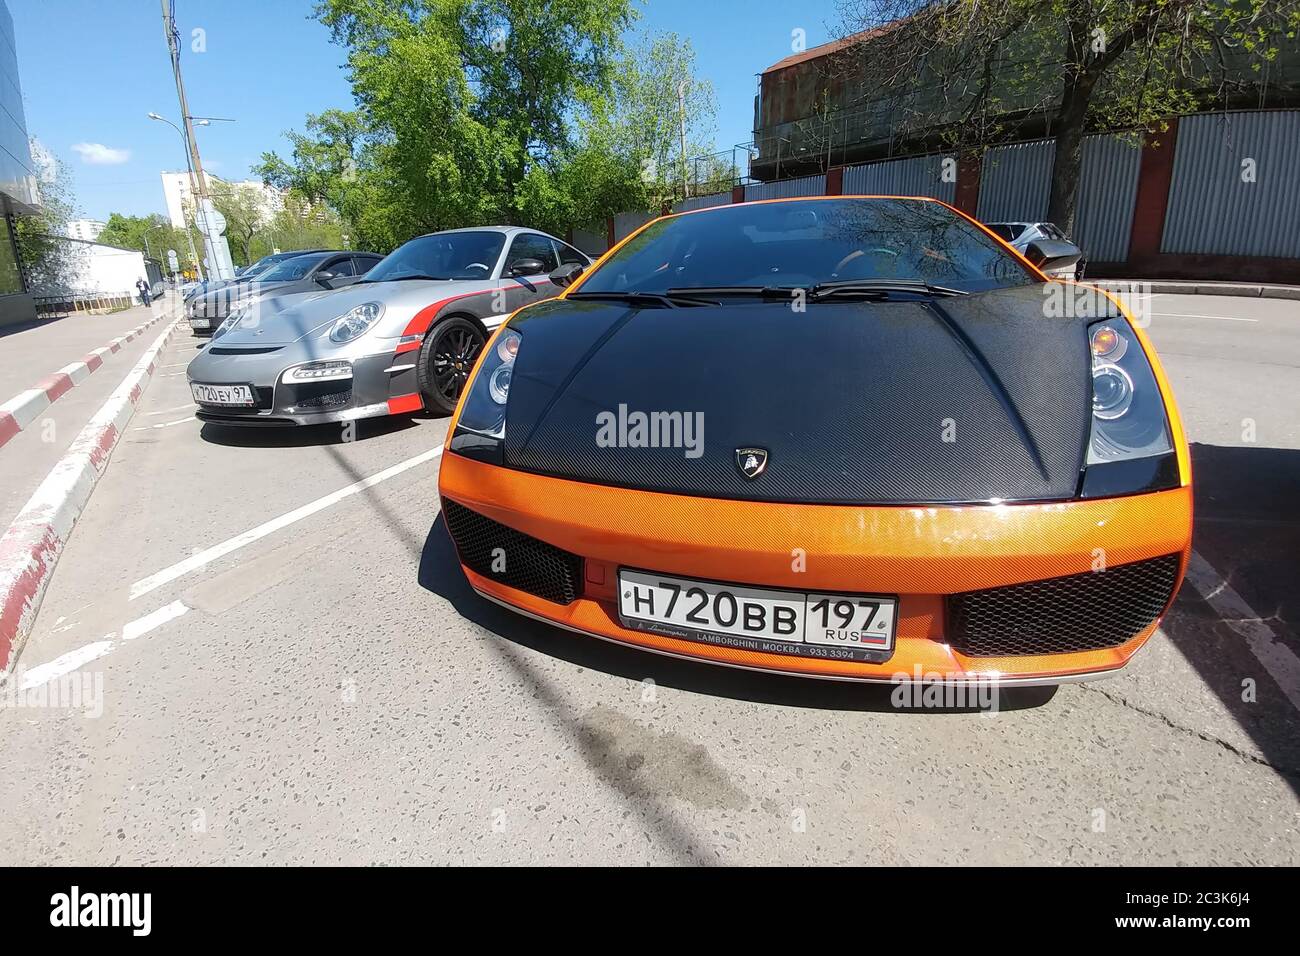 Orange Lamborghini Stockfotos und -bilder Kaufen - Alamy